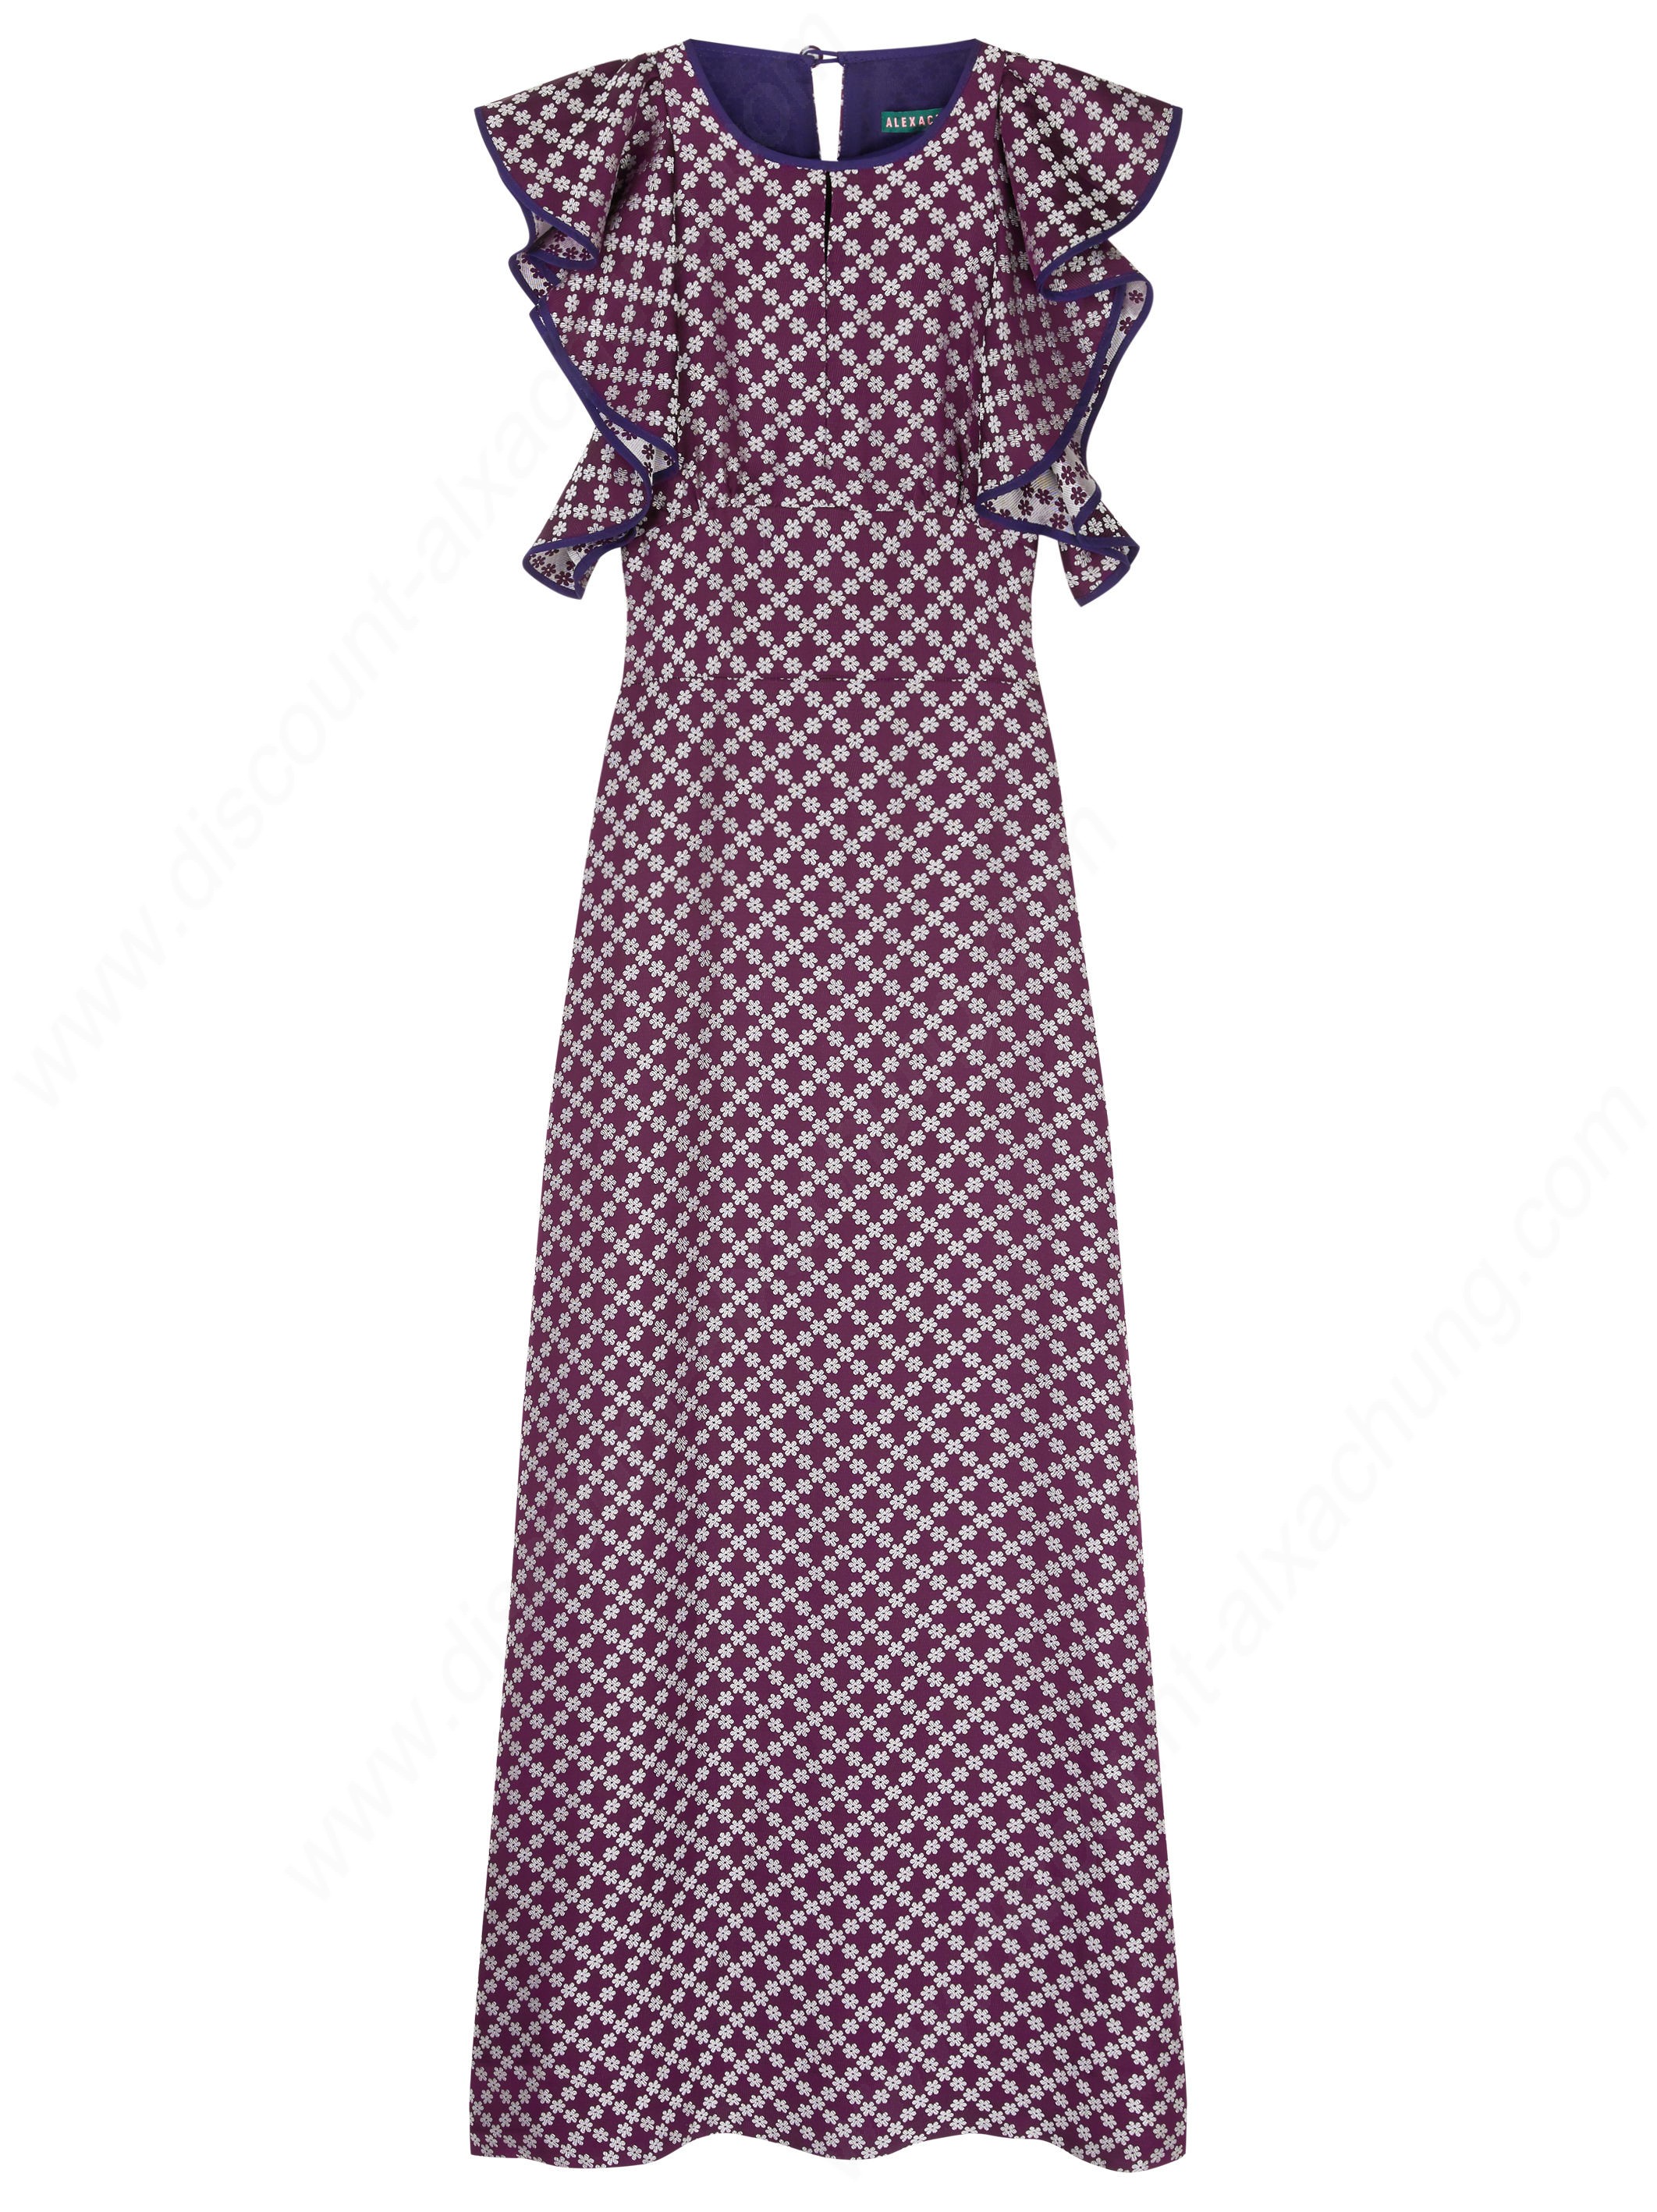 Alexachung Ruffle Detail Aubergine Dress - Alexachung Ruffle Detail Aubergine Dress